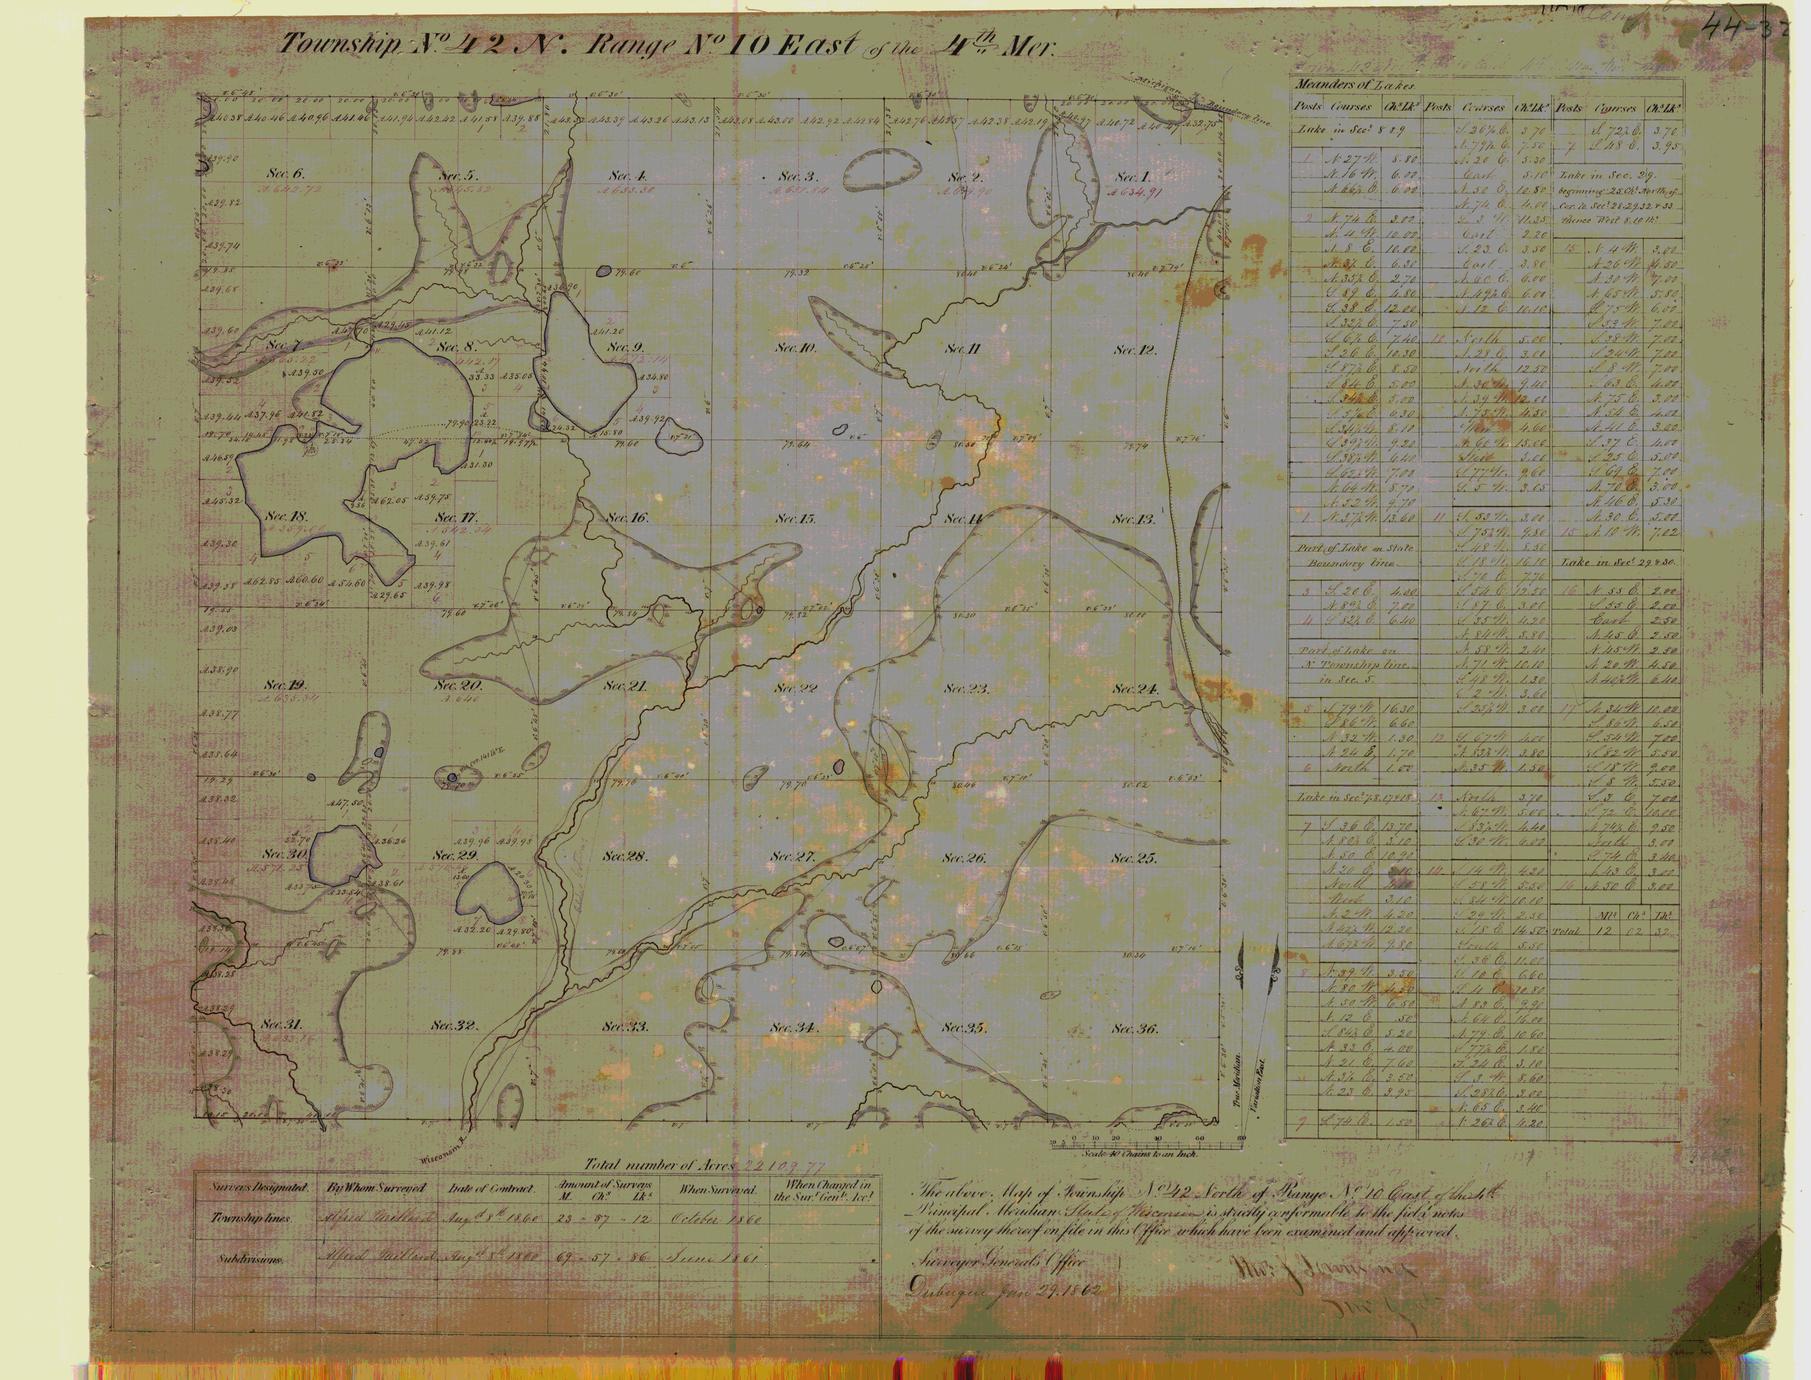 [Public Land Survey System map: Wisconsin Township 42 North, Range 10 East]